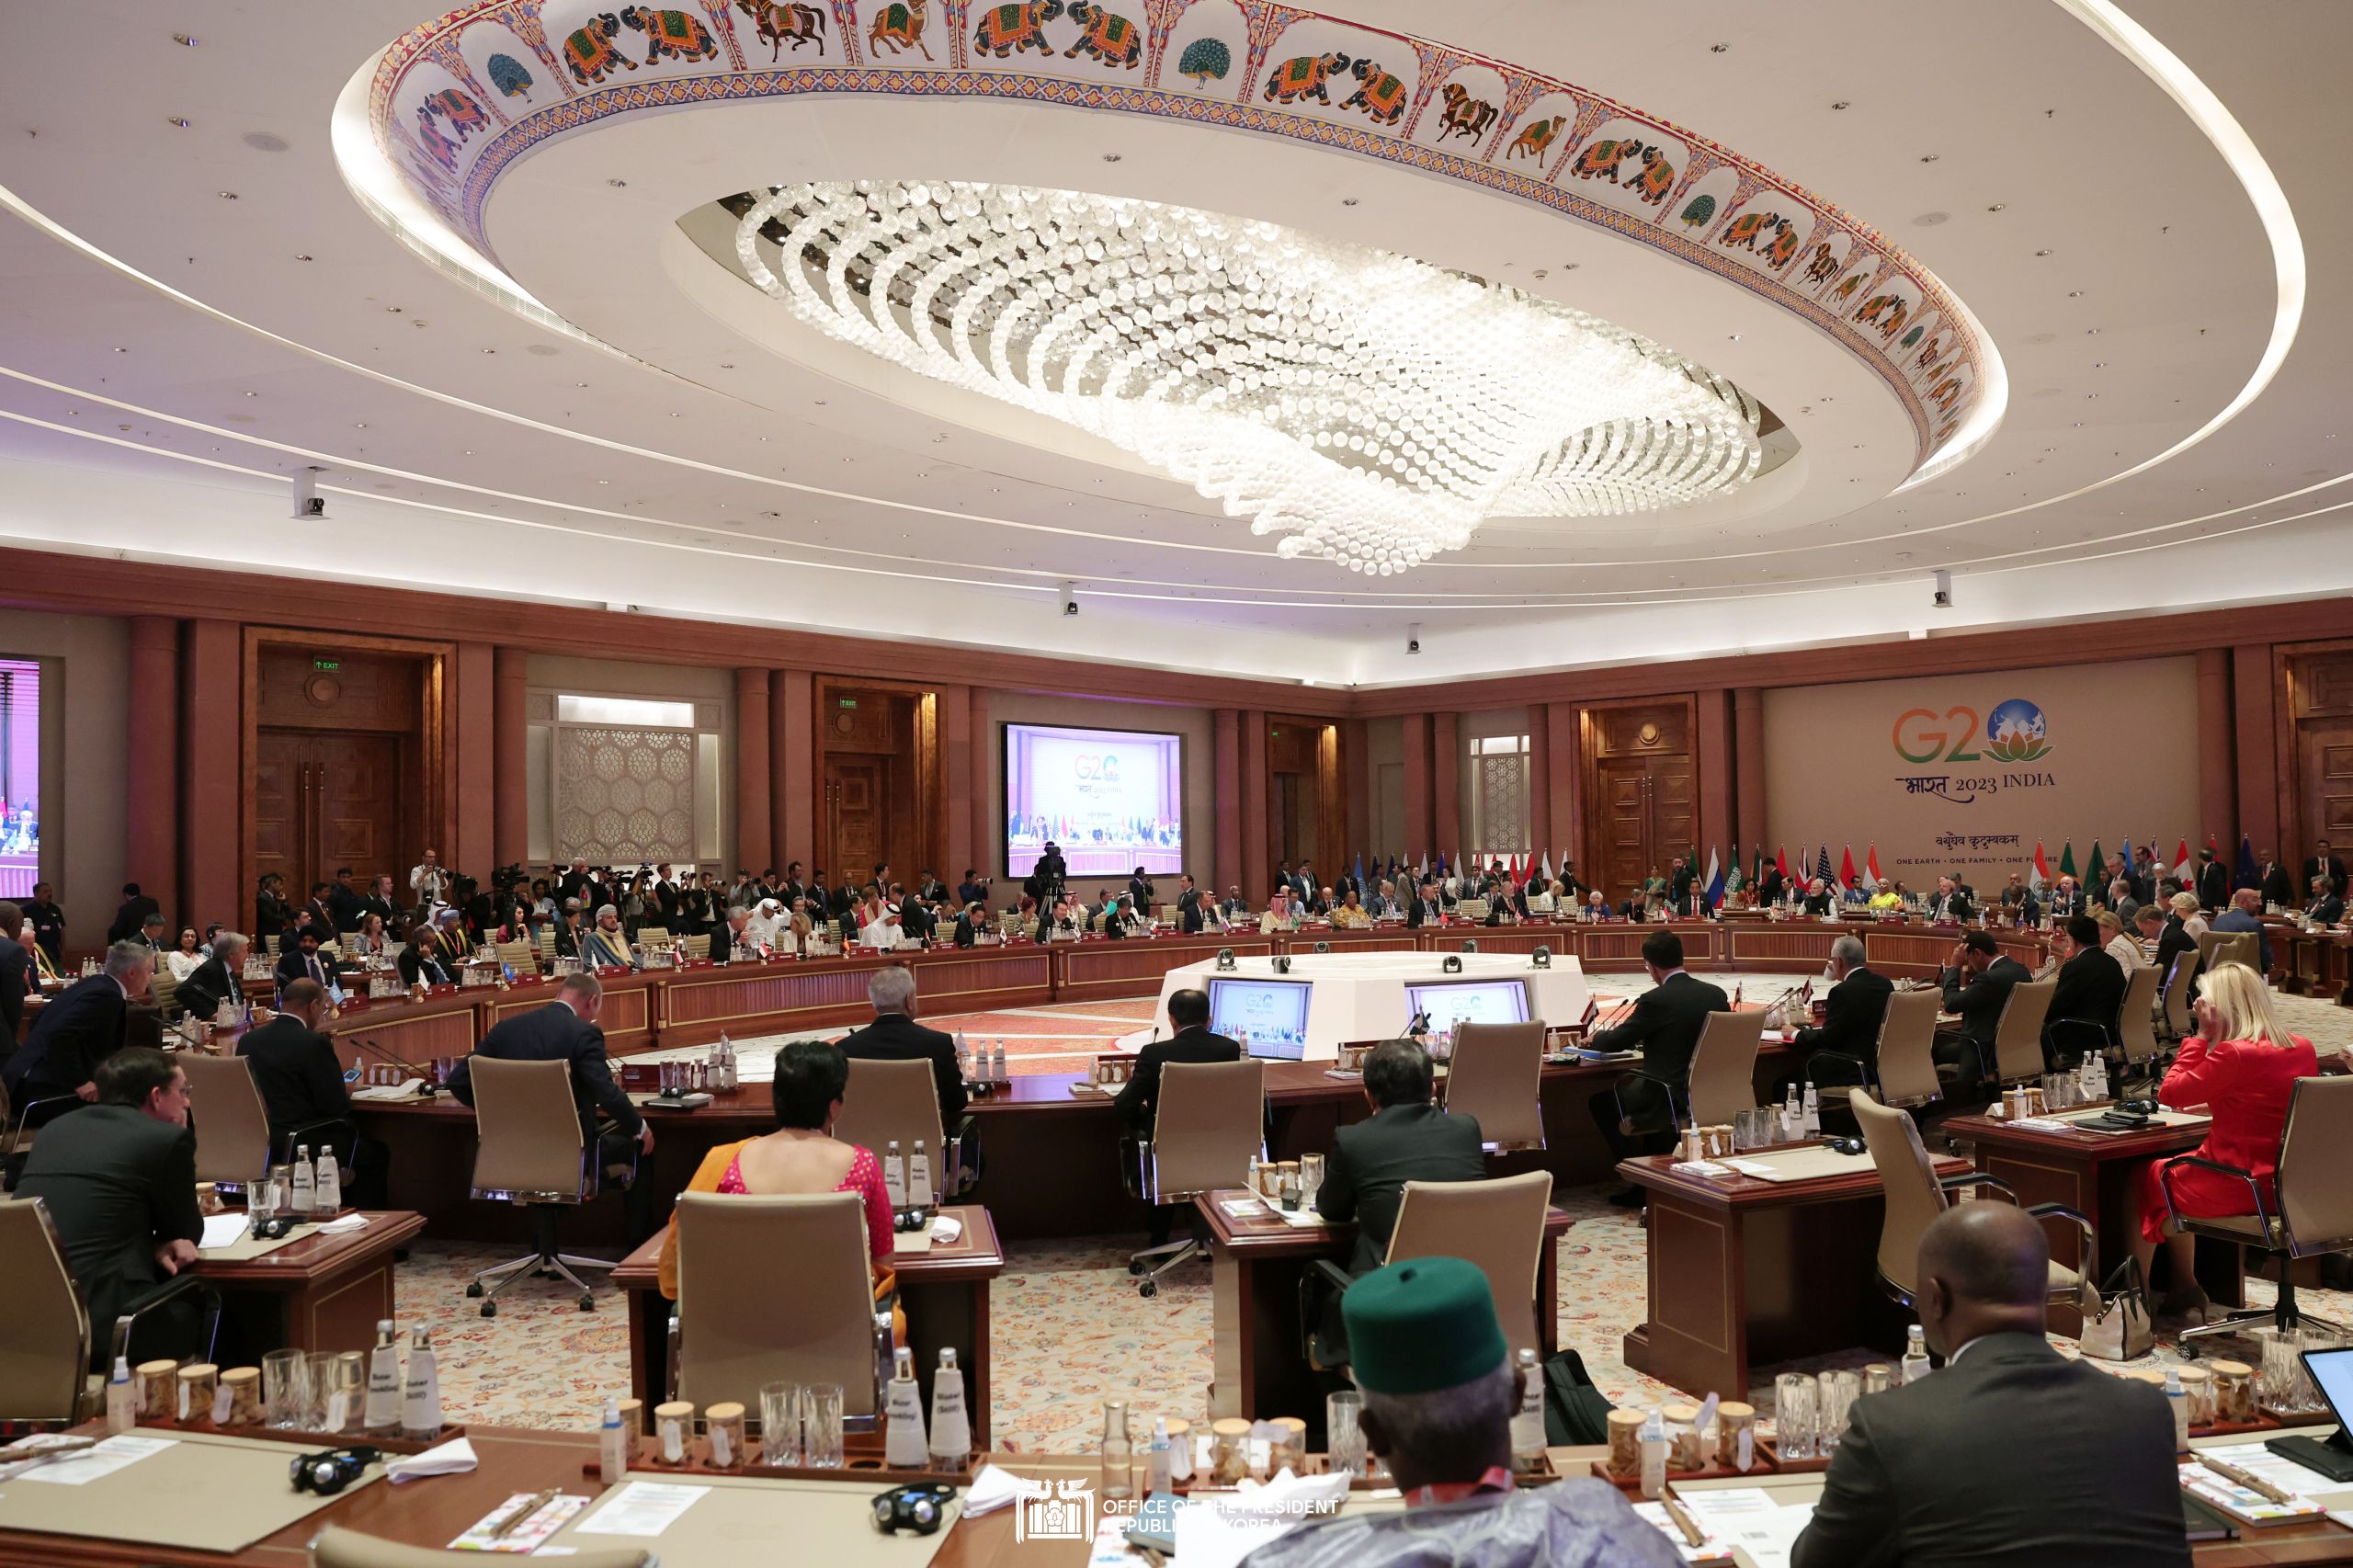 G20 Summit Session III (One Future) in New Delhi, India slide 1